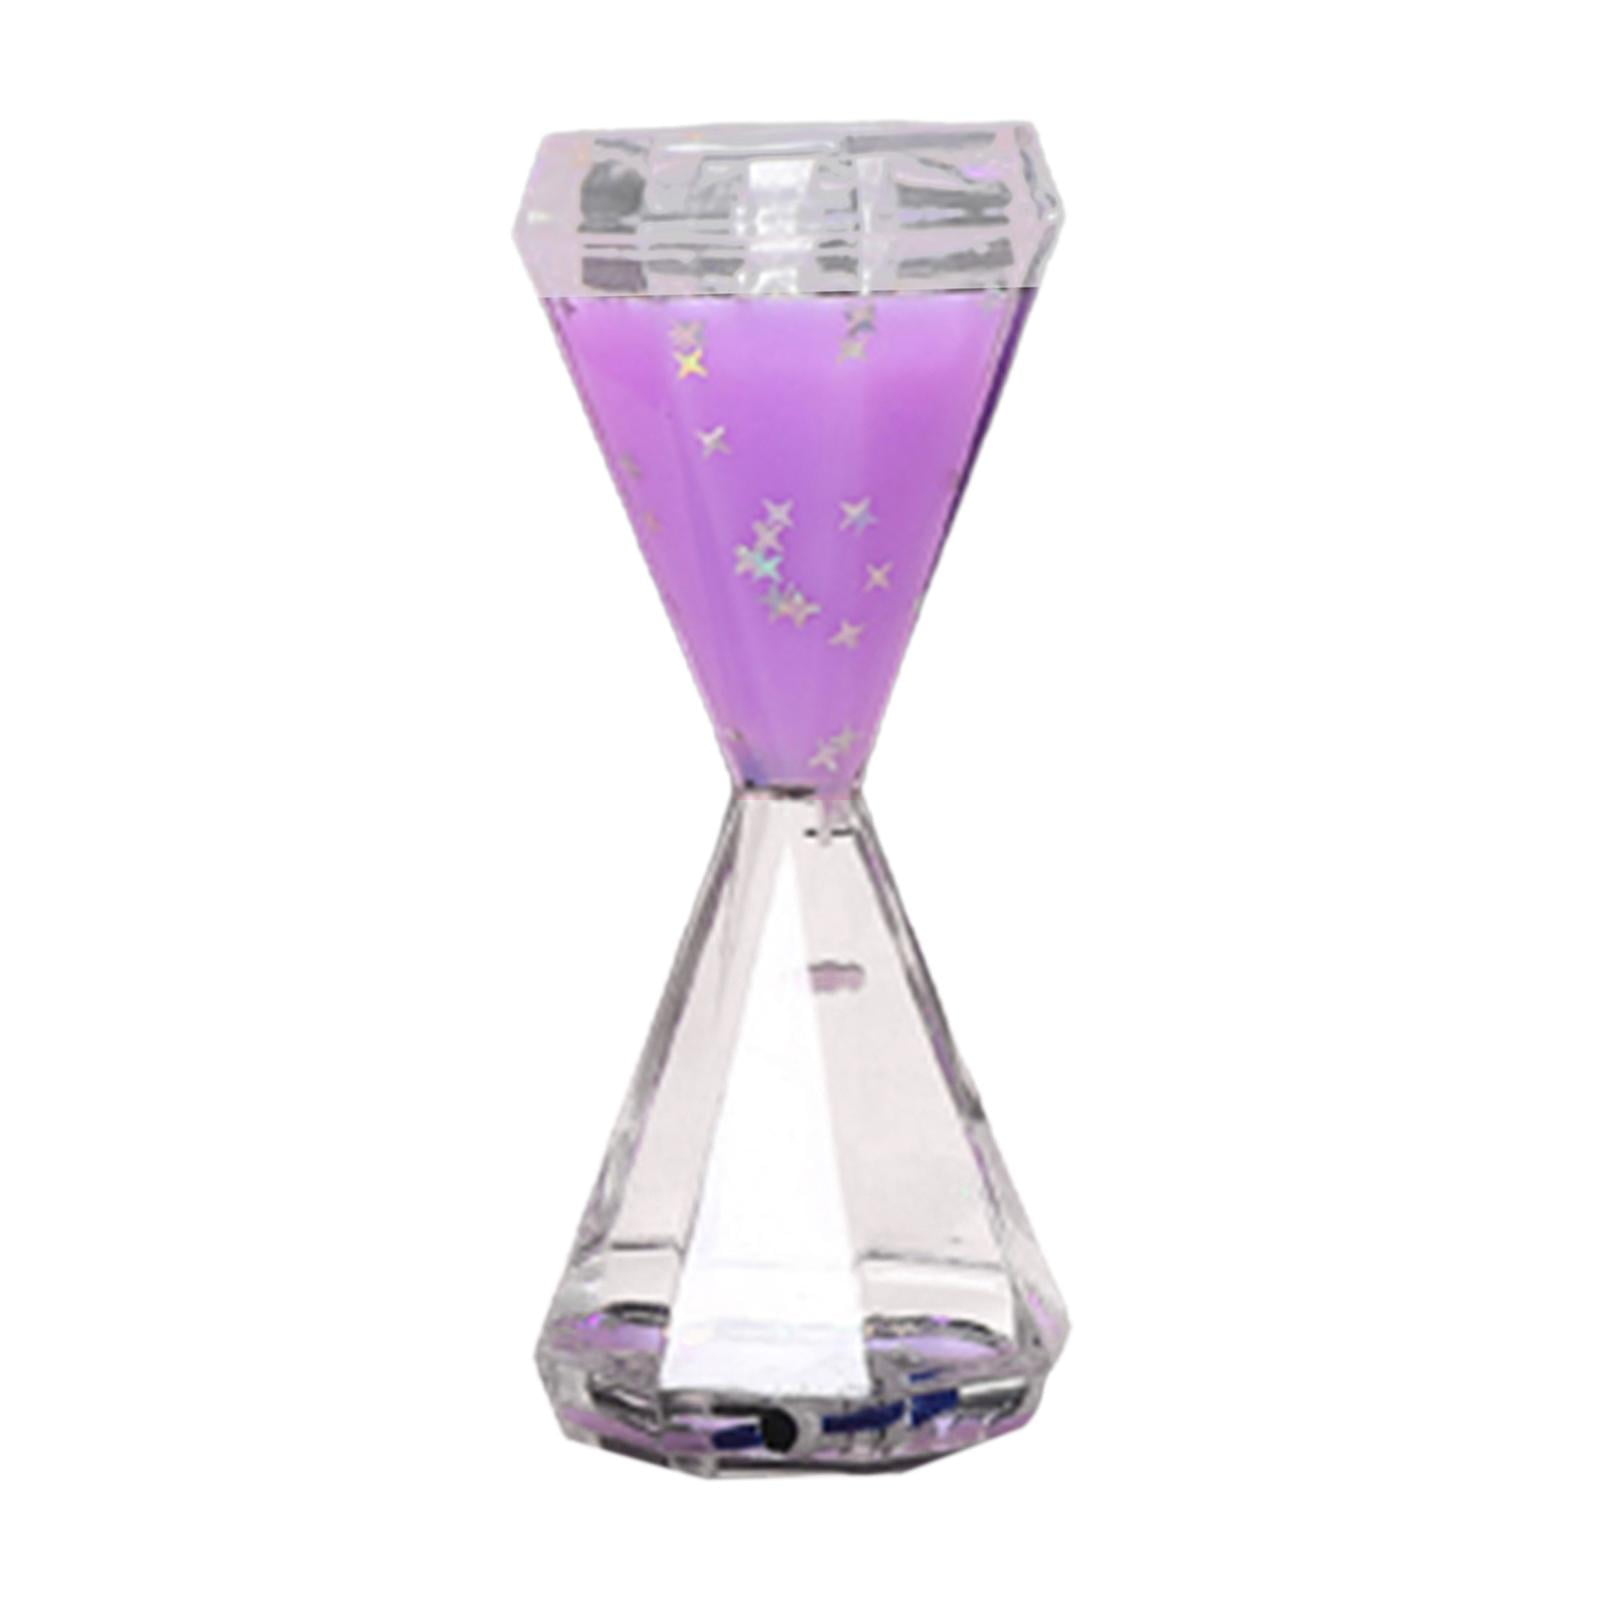 1PCS Sensory Play Timers Hour Glass Timer Kids Liquid Timers